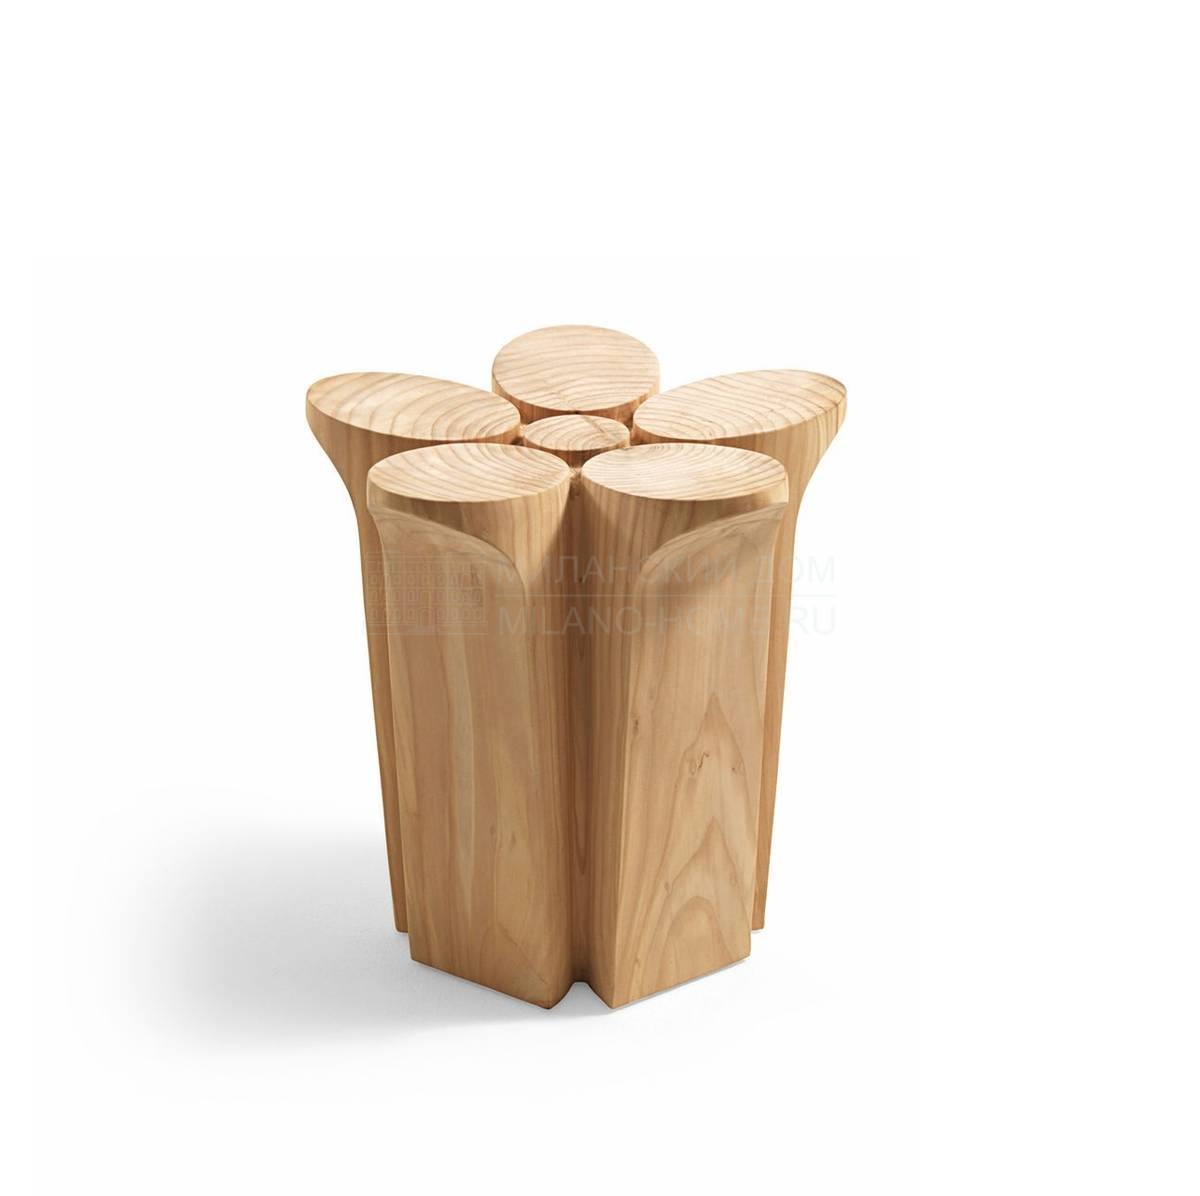 Табурет Fiore / stool из Италии фабрики RIVA1920